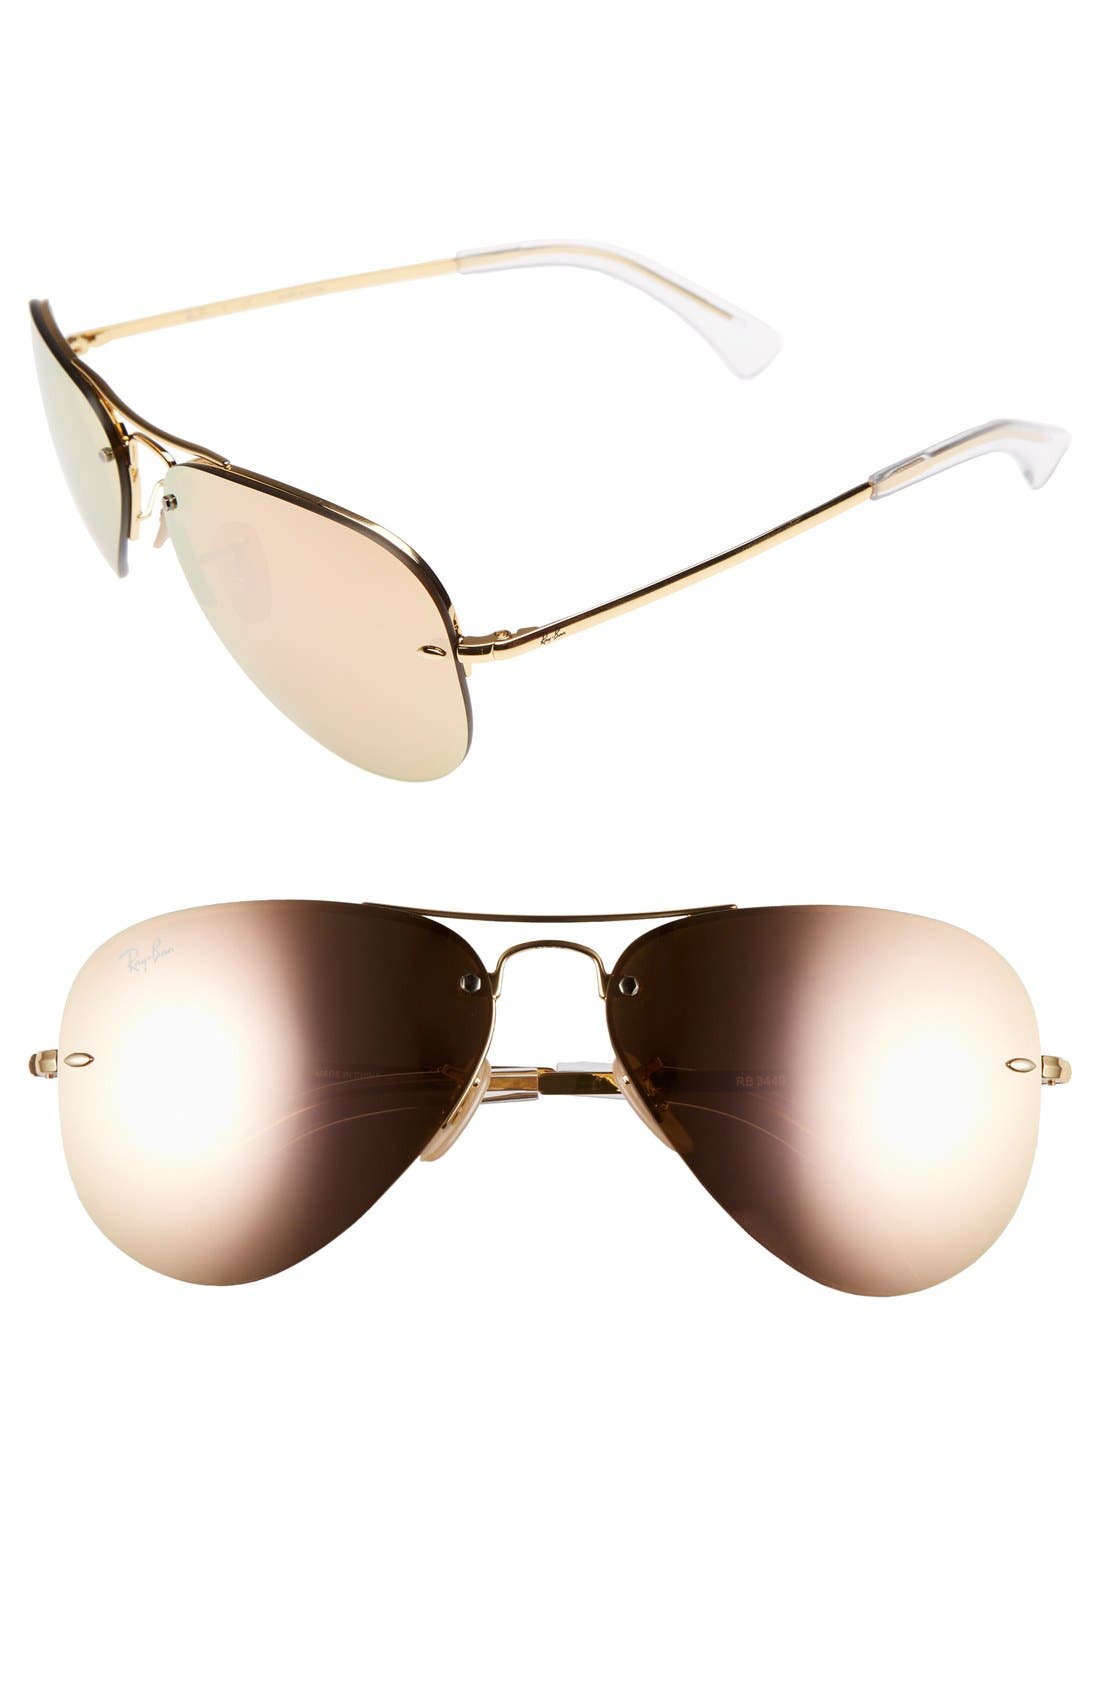 Accessories Sunglasses Aviator Glasses Rayban Aviator Glasses brown casual look 